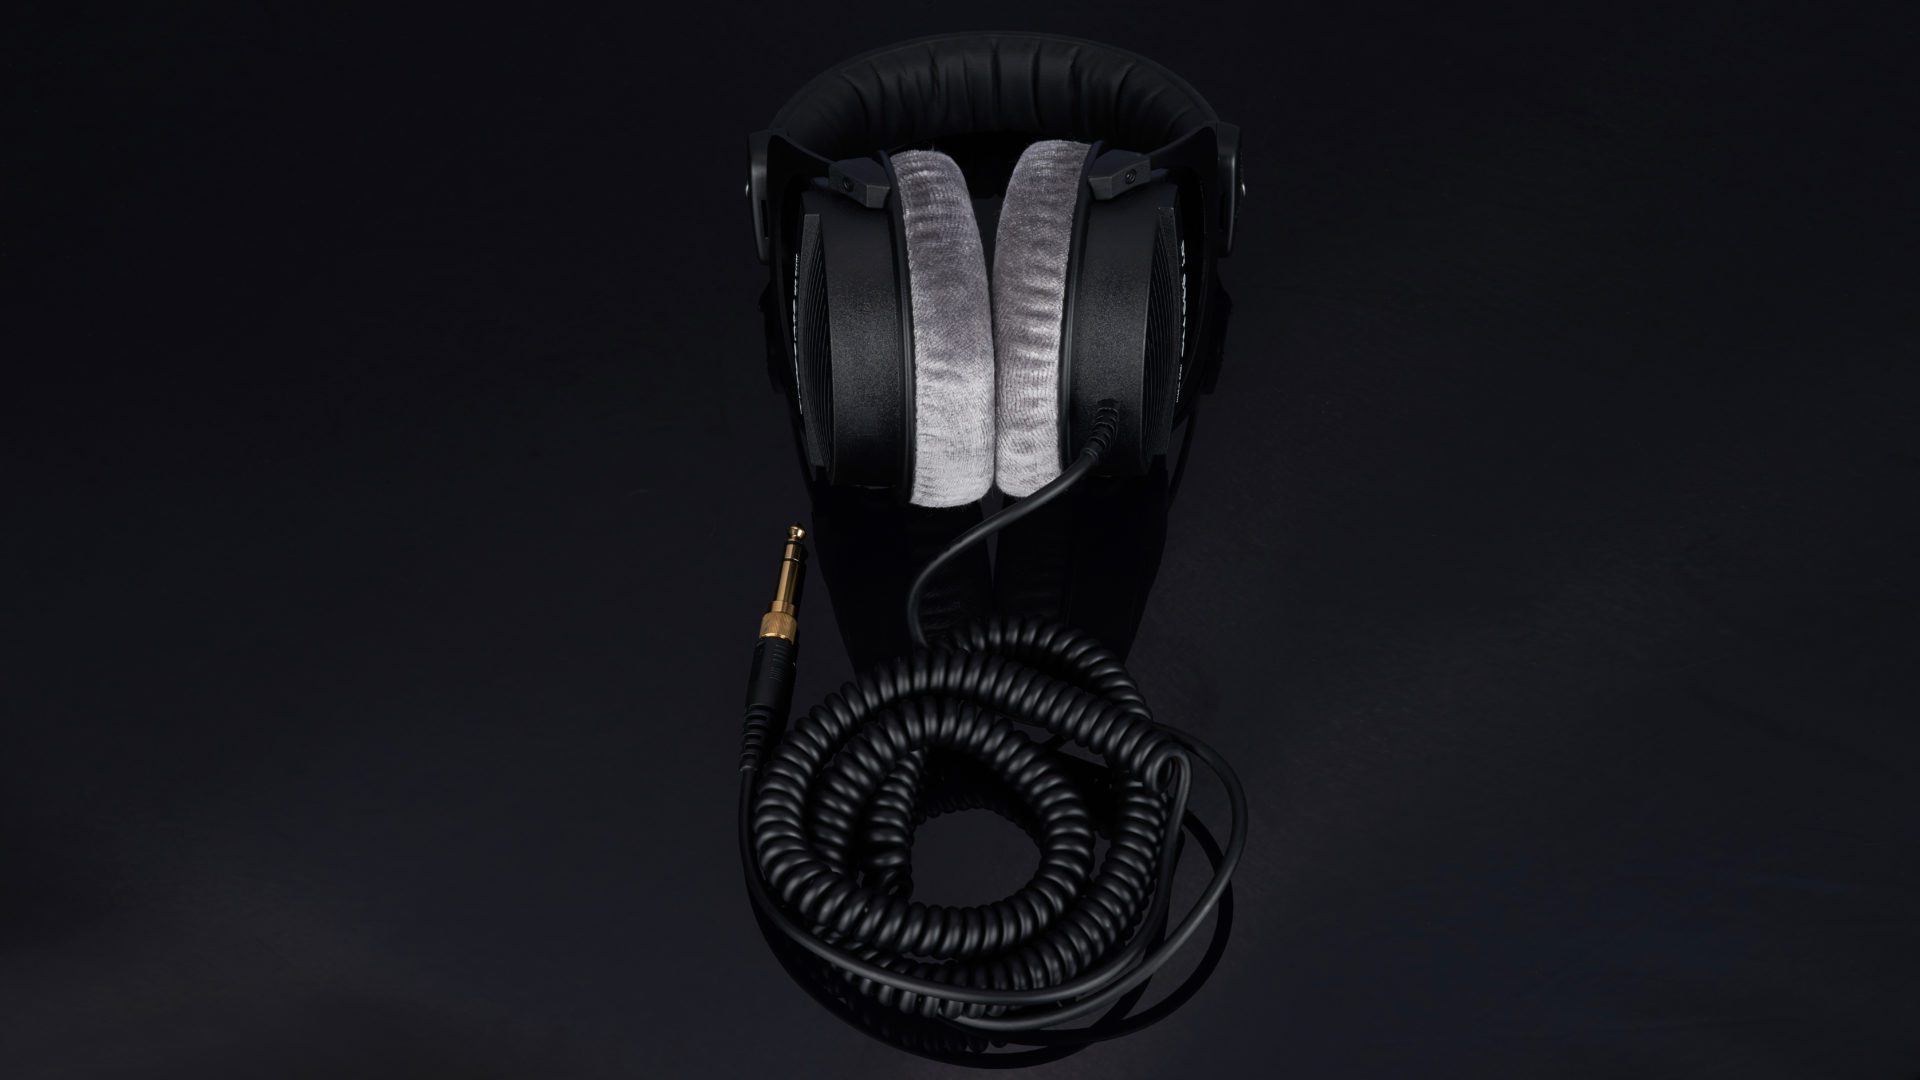 THE LEGENDARY Beyerdynamic DT 990 PRO Headphones 🎧 REVIEWED 